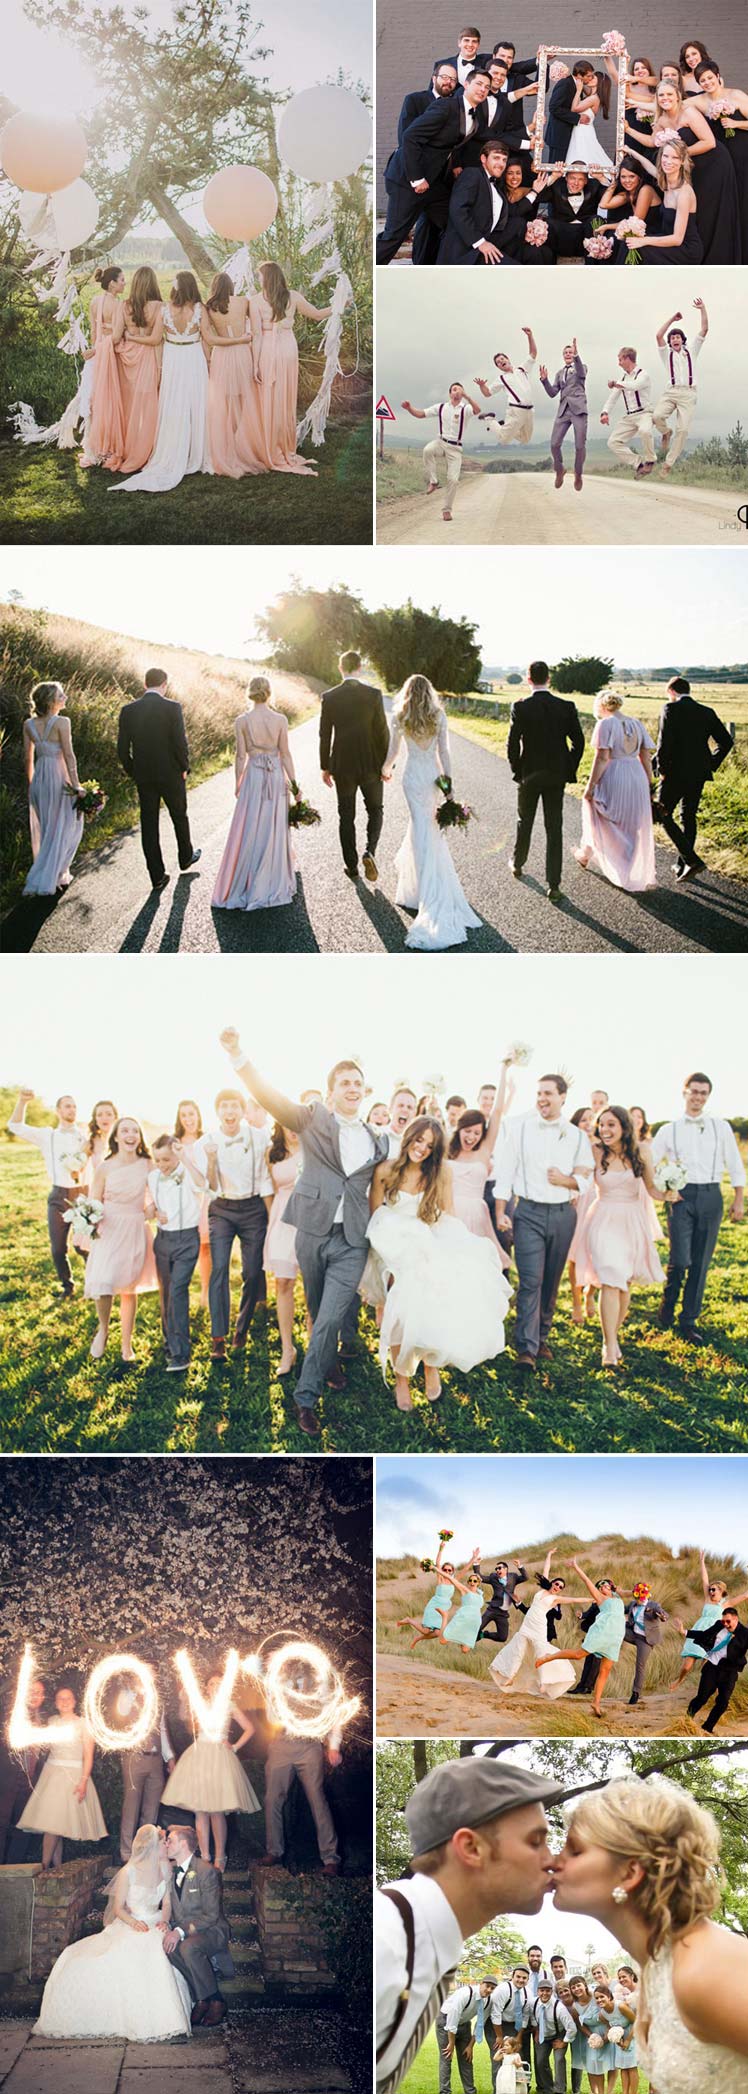 Fun wedding party photo ideas